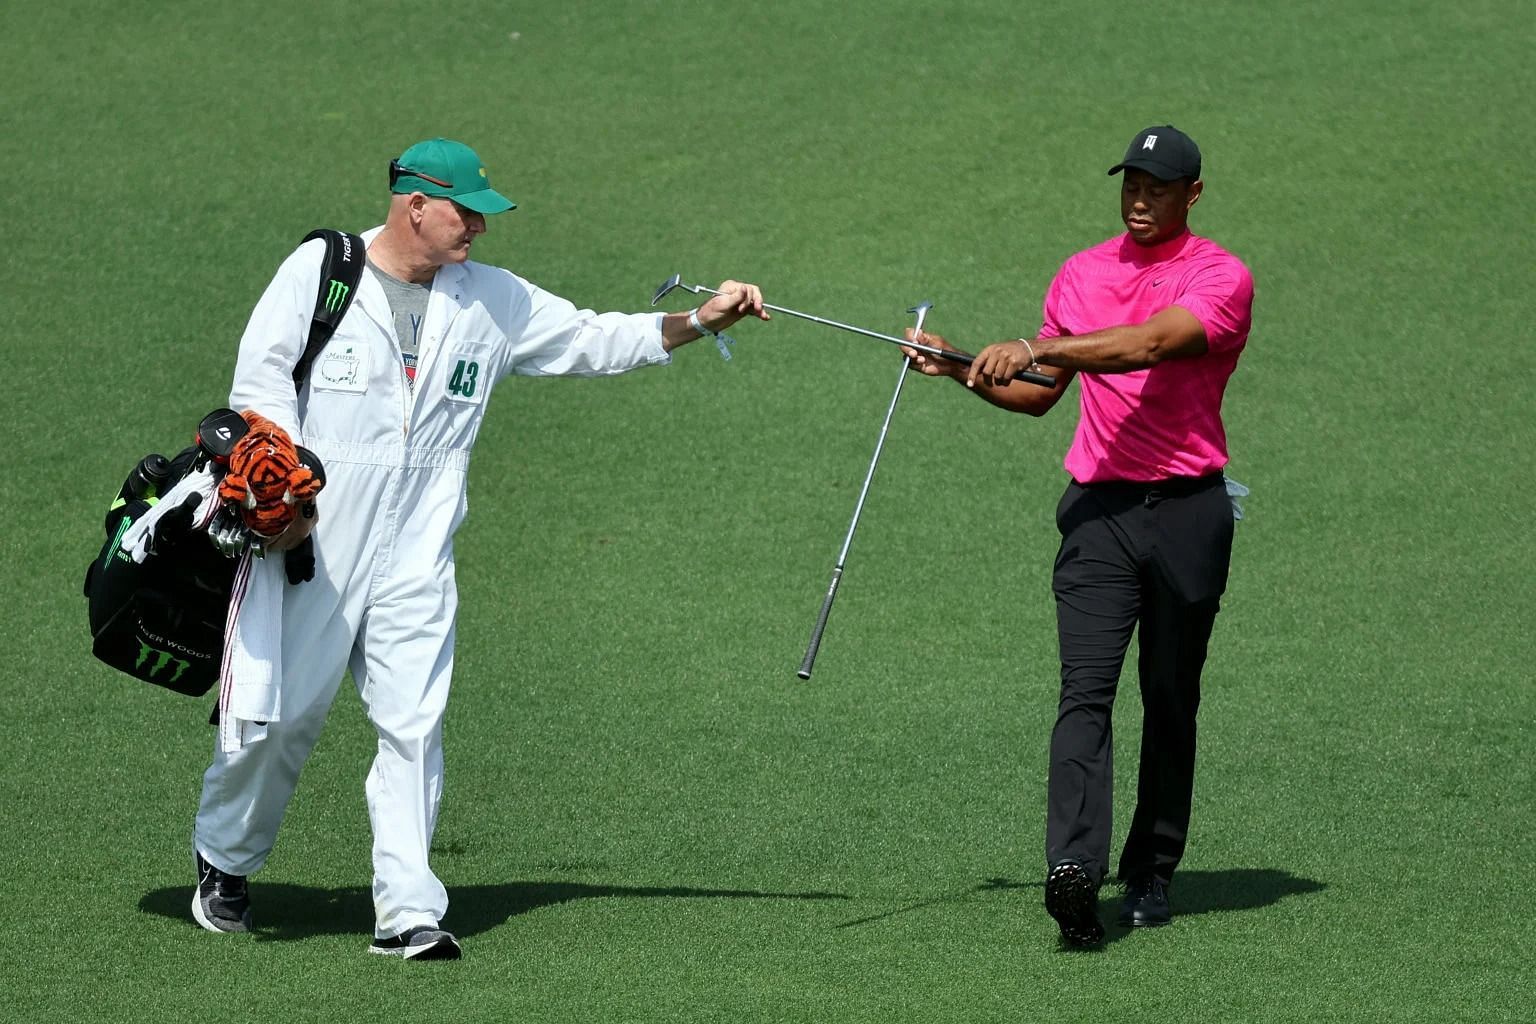 Tiger Woods and his caddie. Joe LaCava